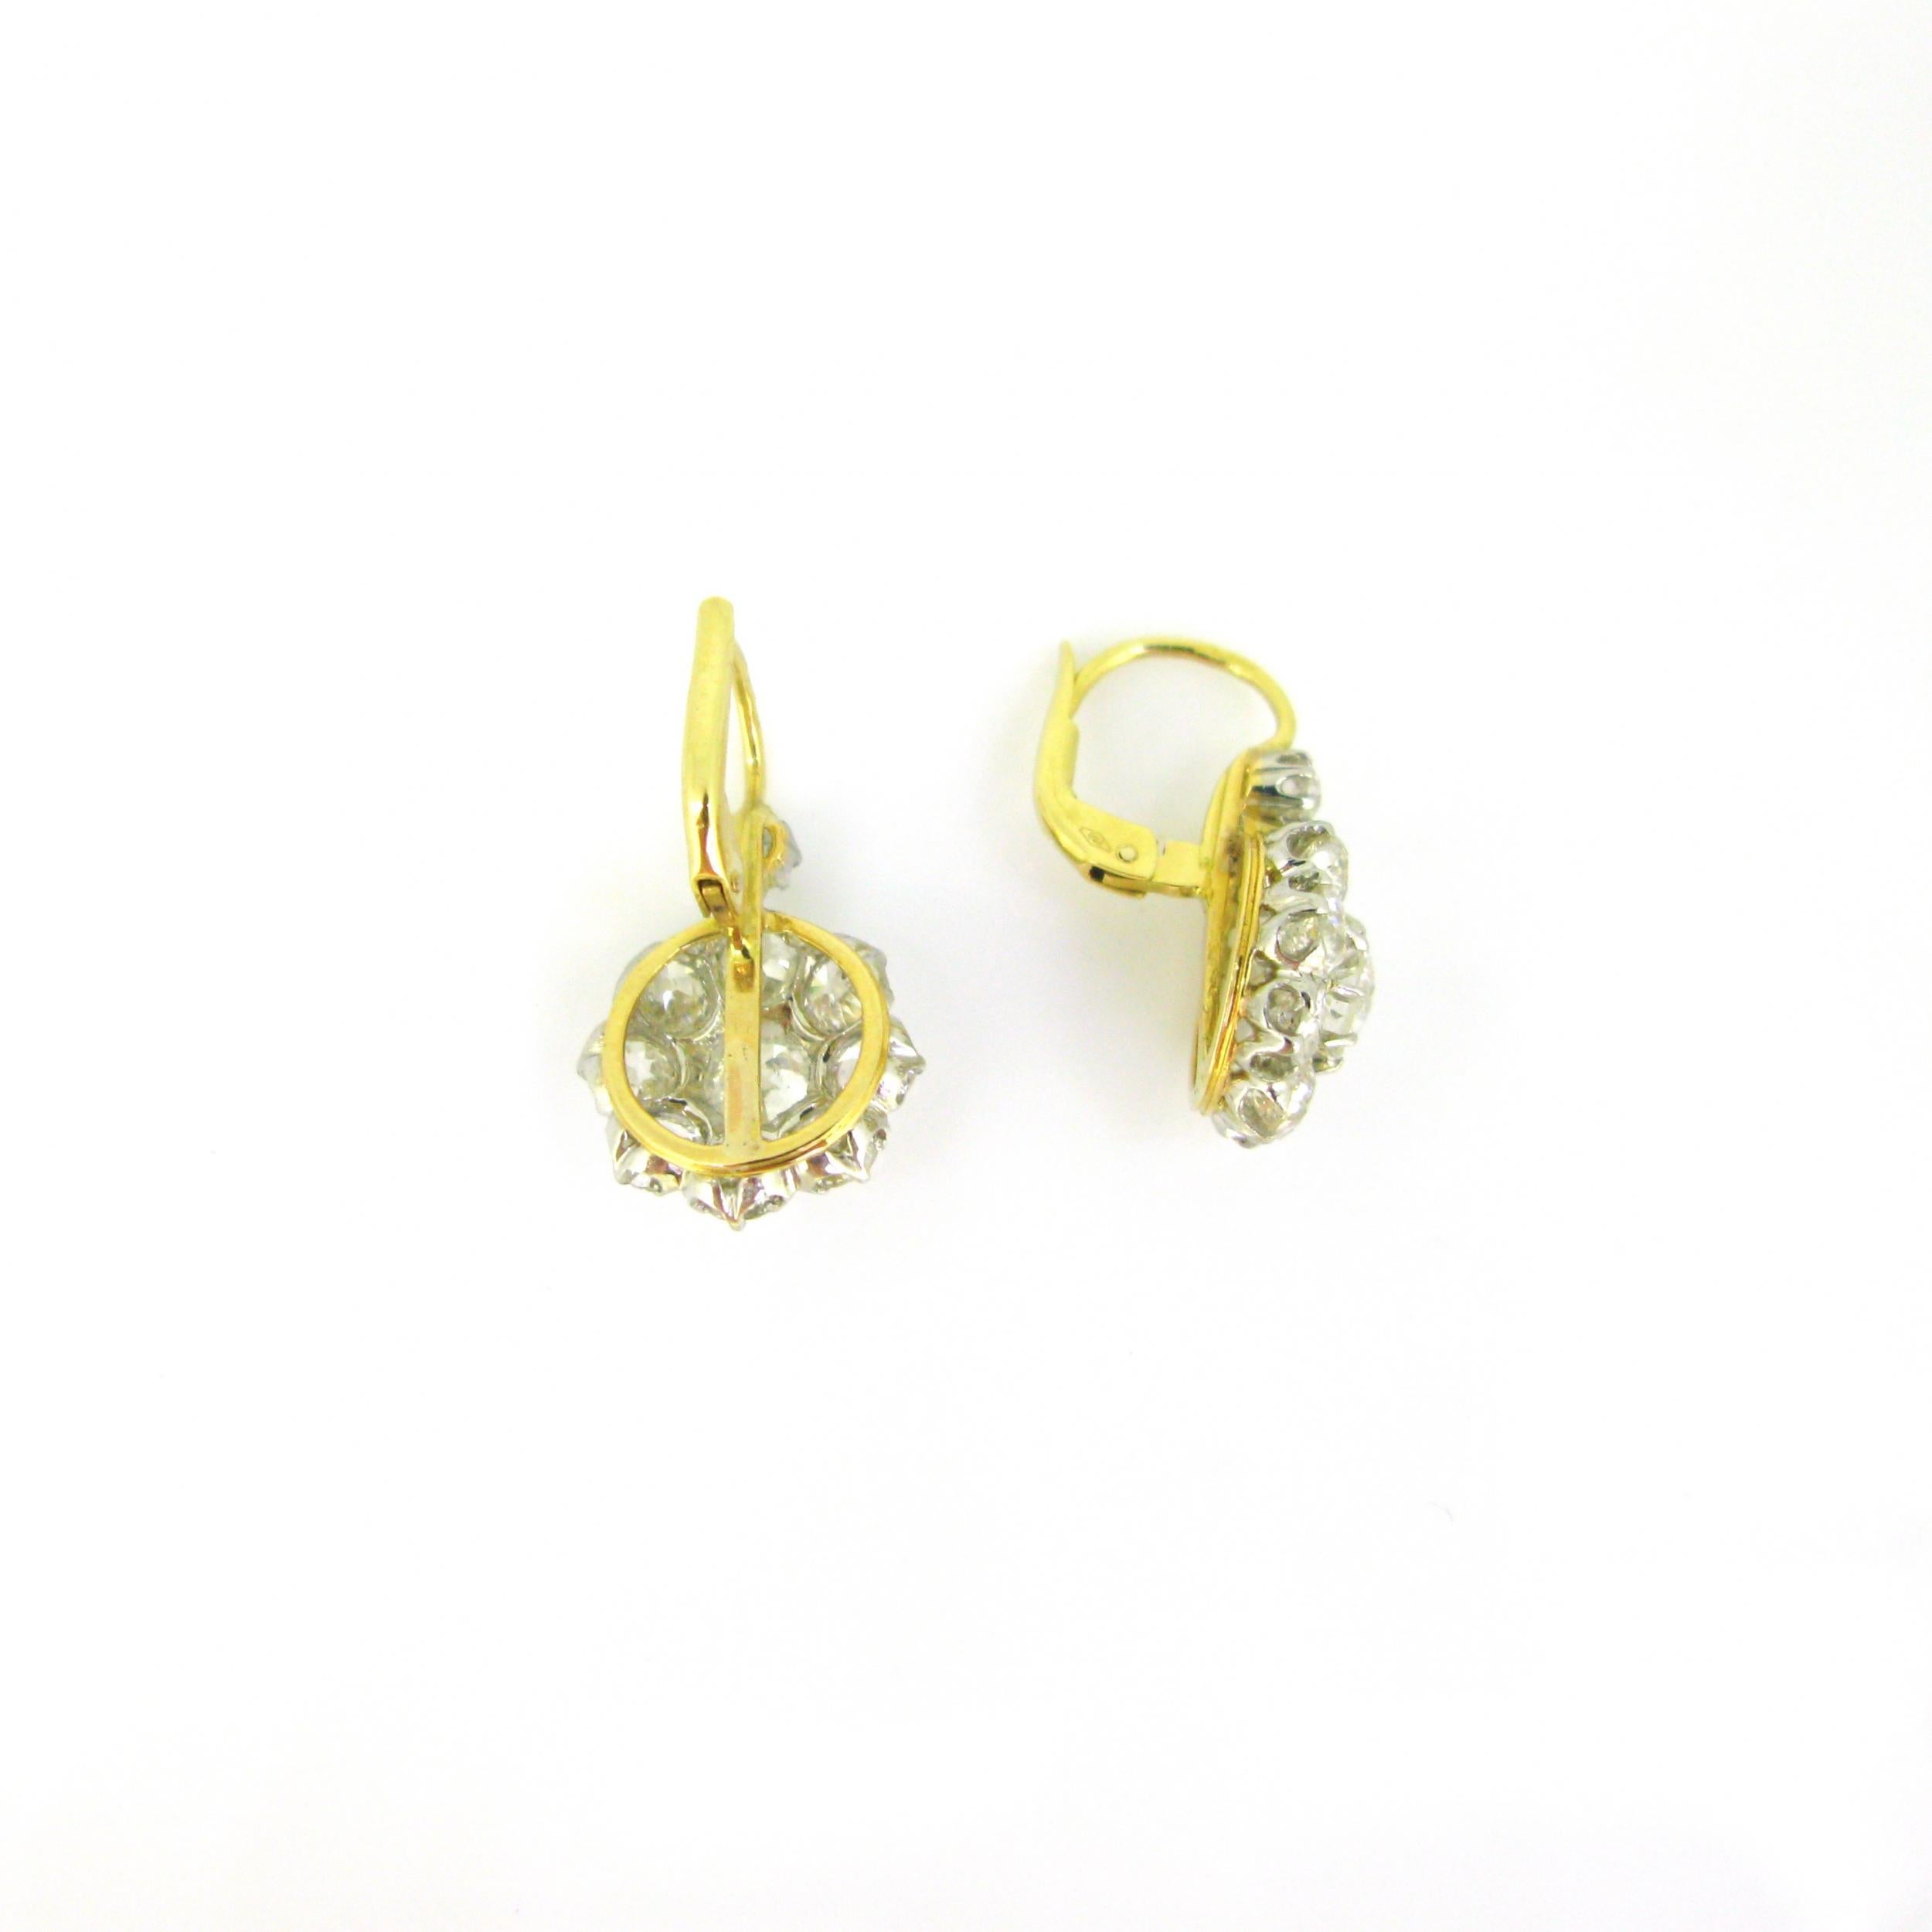 Old Mine Cut Antique Belle Époque Diamonds Dormeuses Earrings in Box, 18kt Gold and Platinum